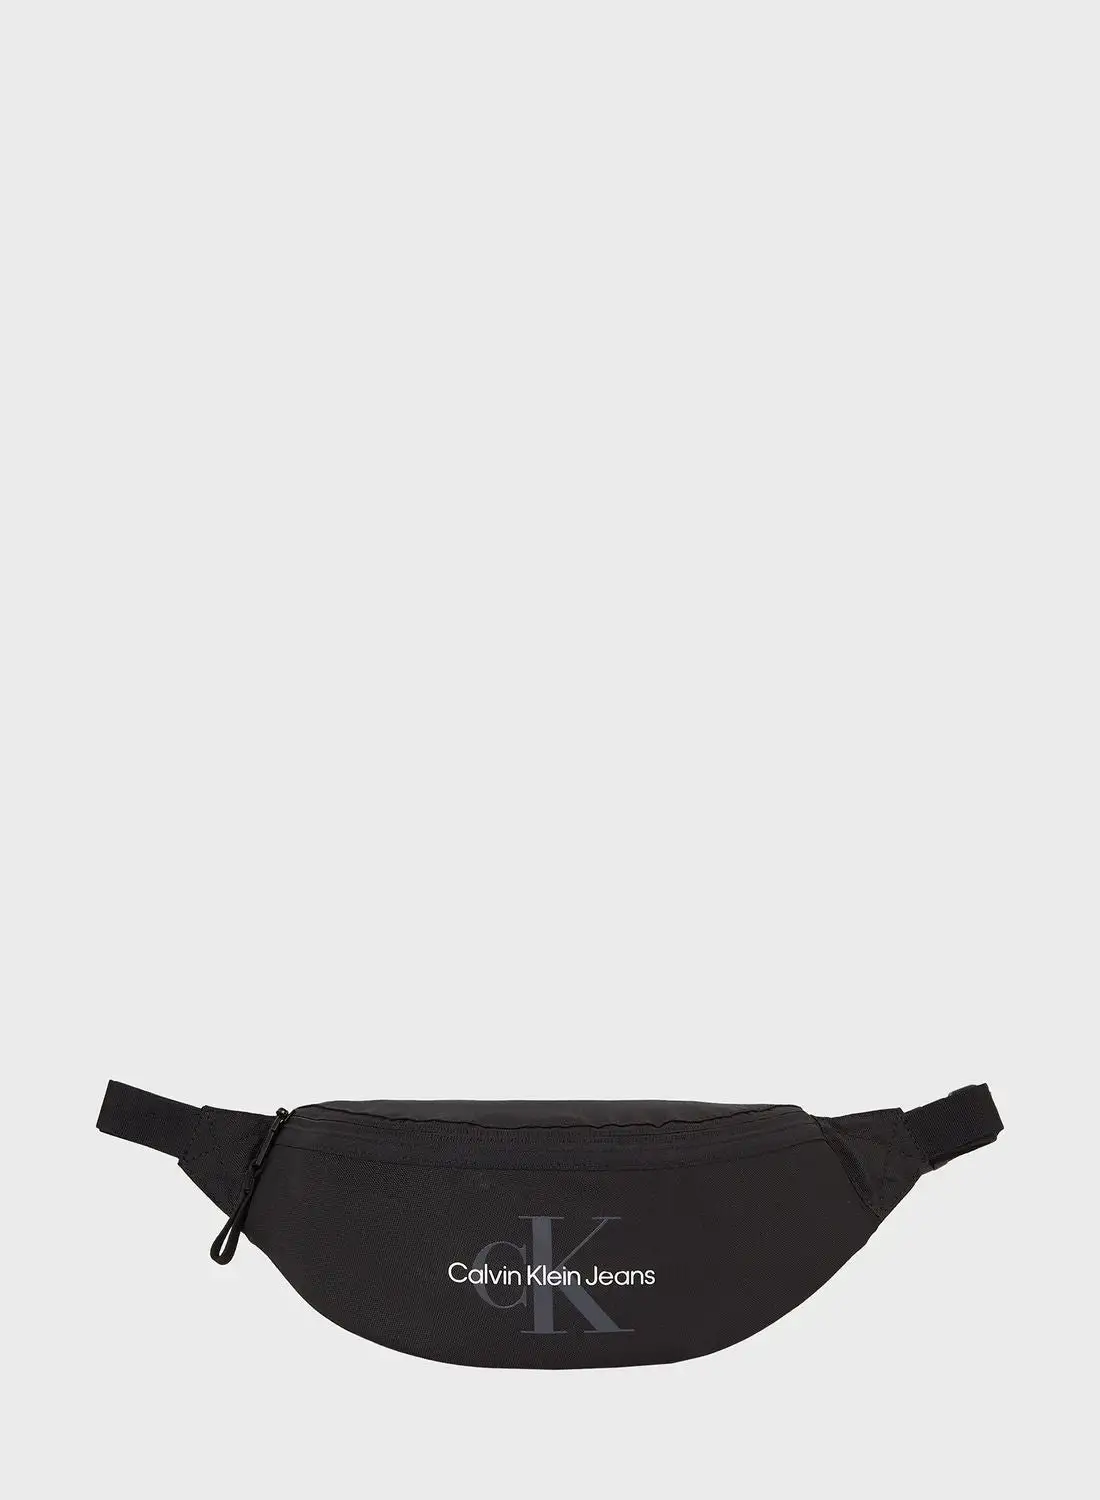 Calvin Klein Jeans Logo Waist Bag